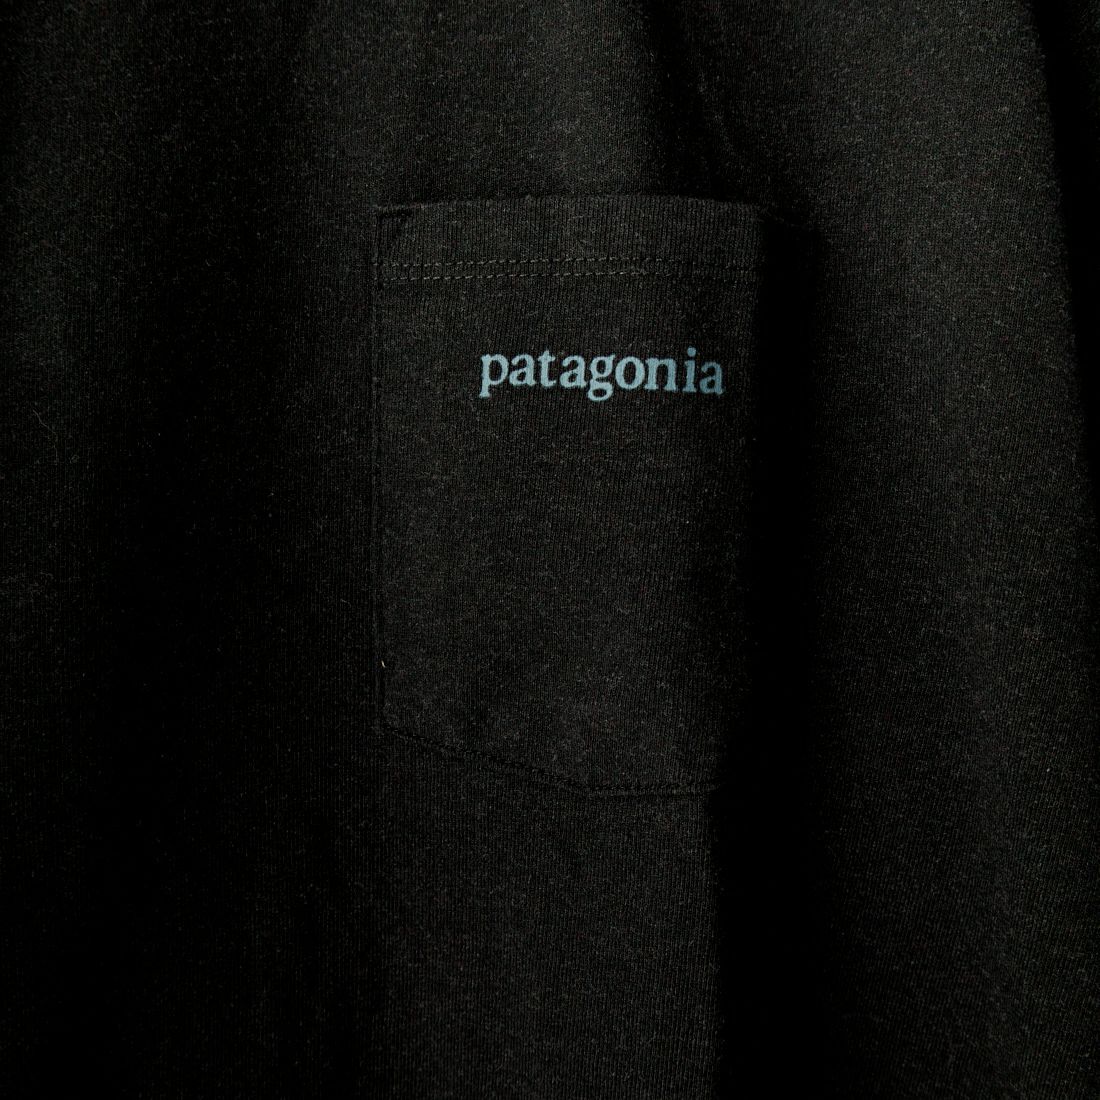 INBpatagonia [パタゴニア] ラインロゴリッジ ポケットレスポンシビリティー [38511] INBK